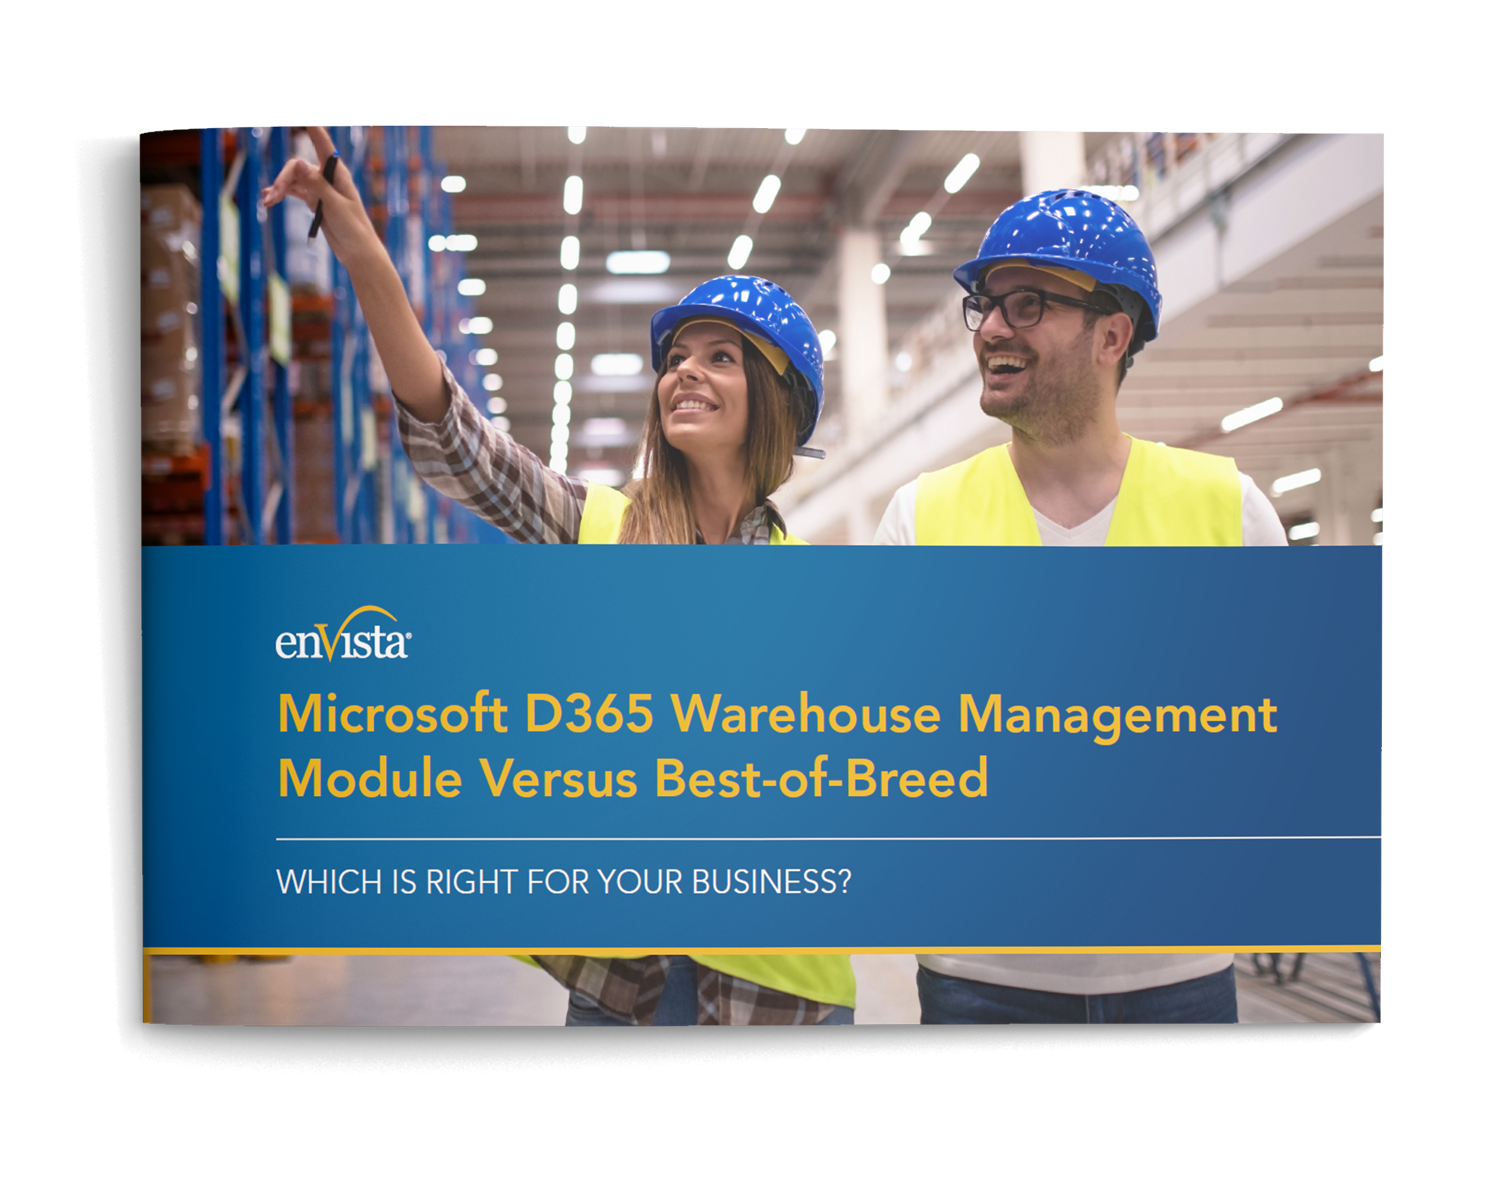 D365 Warehouse Management Versus Best-of-Breed